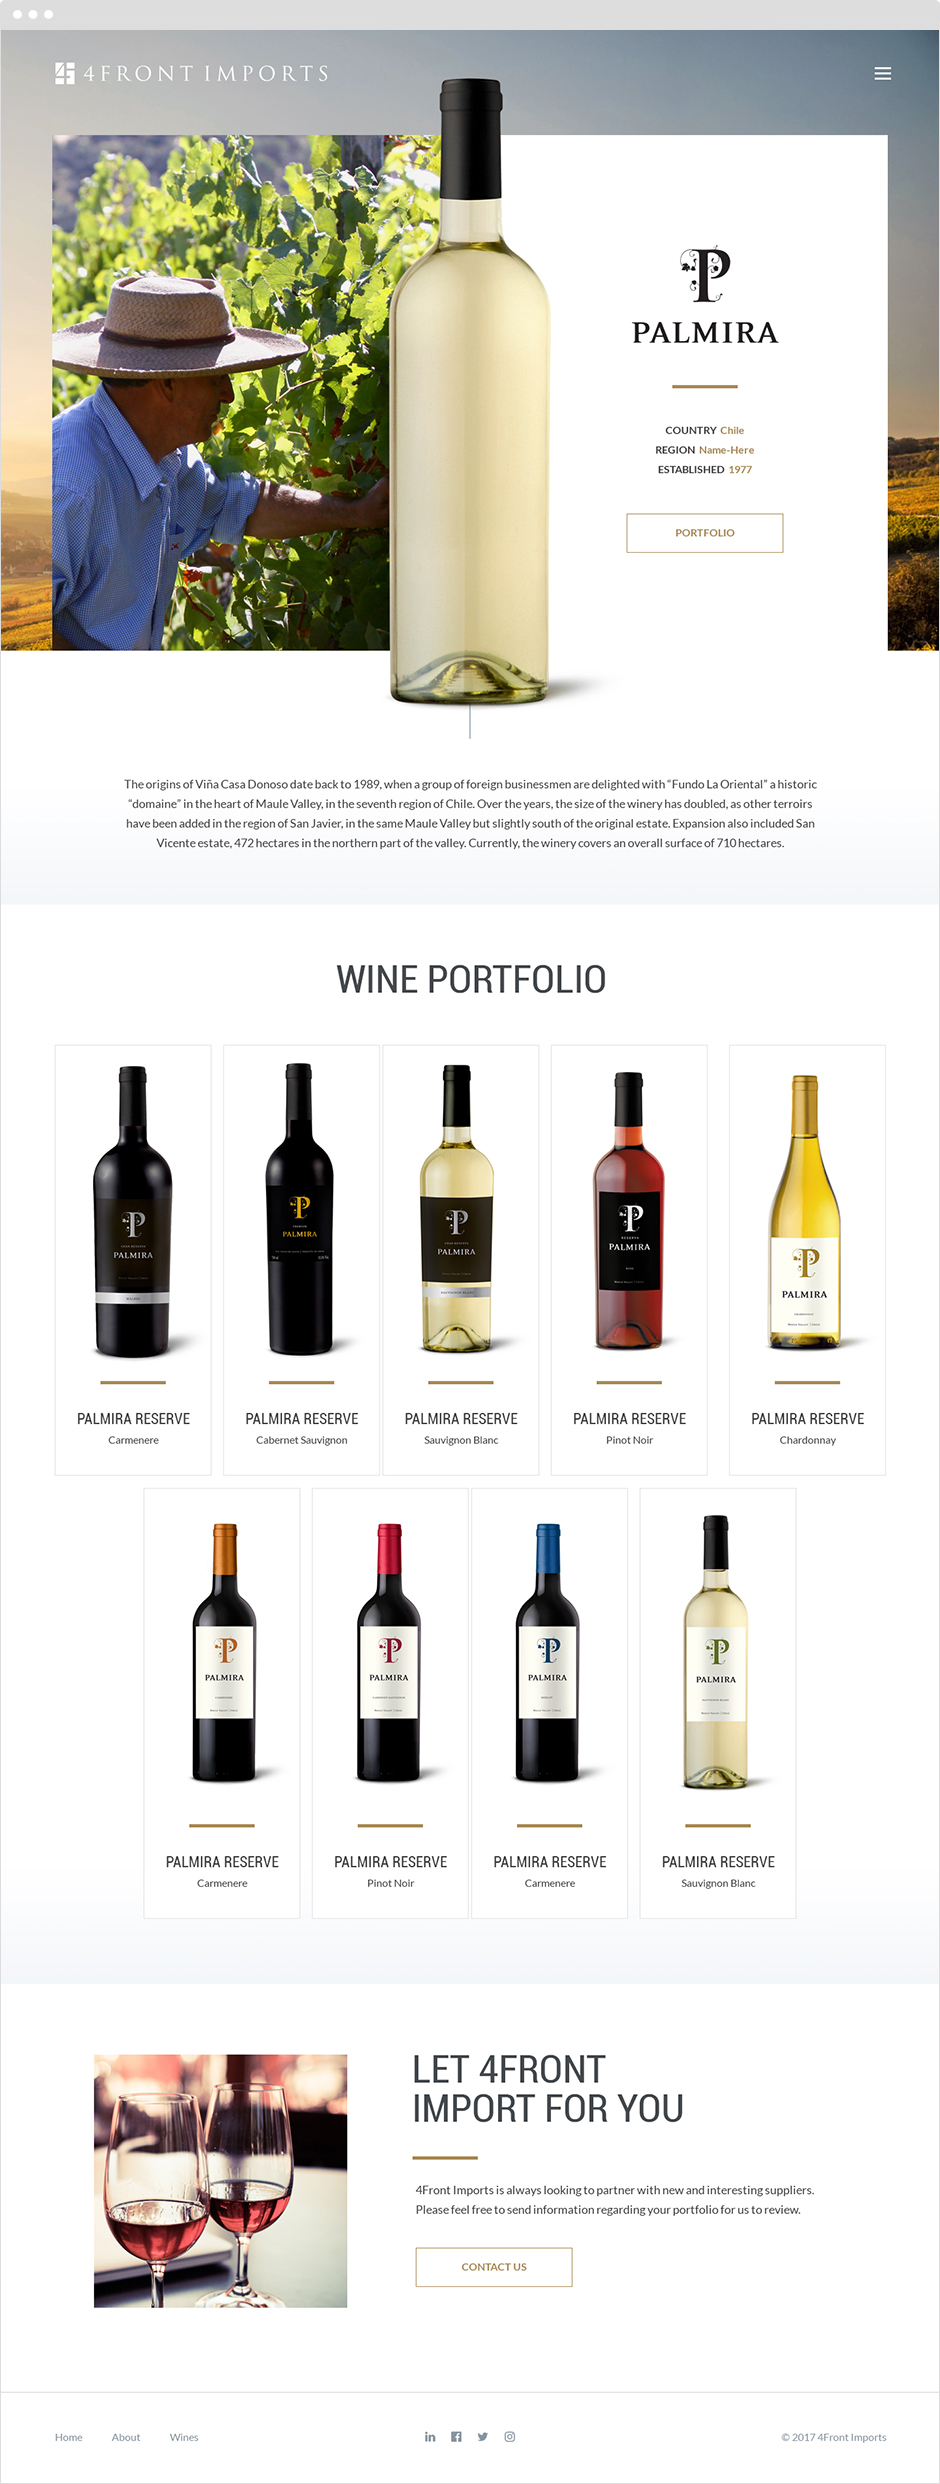 4Front Imports Wine Portfolio Page